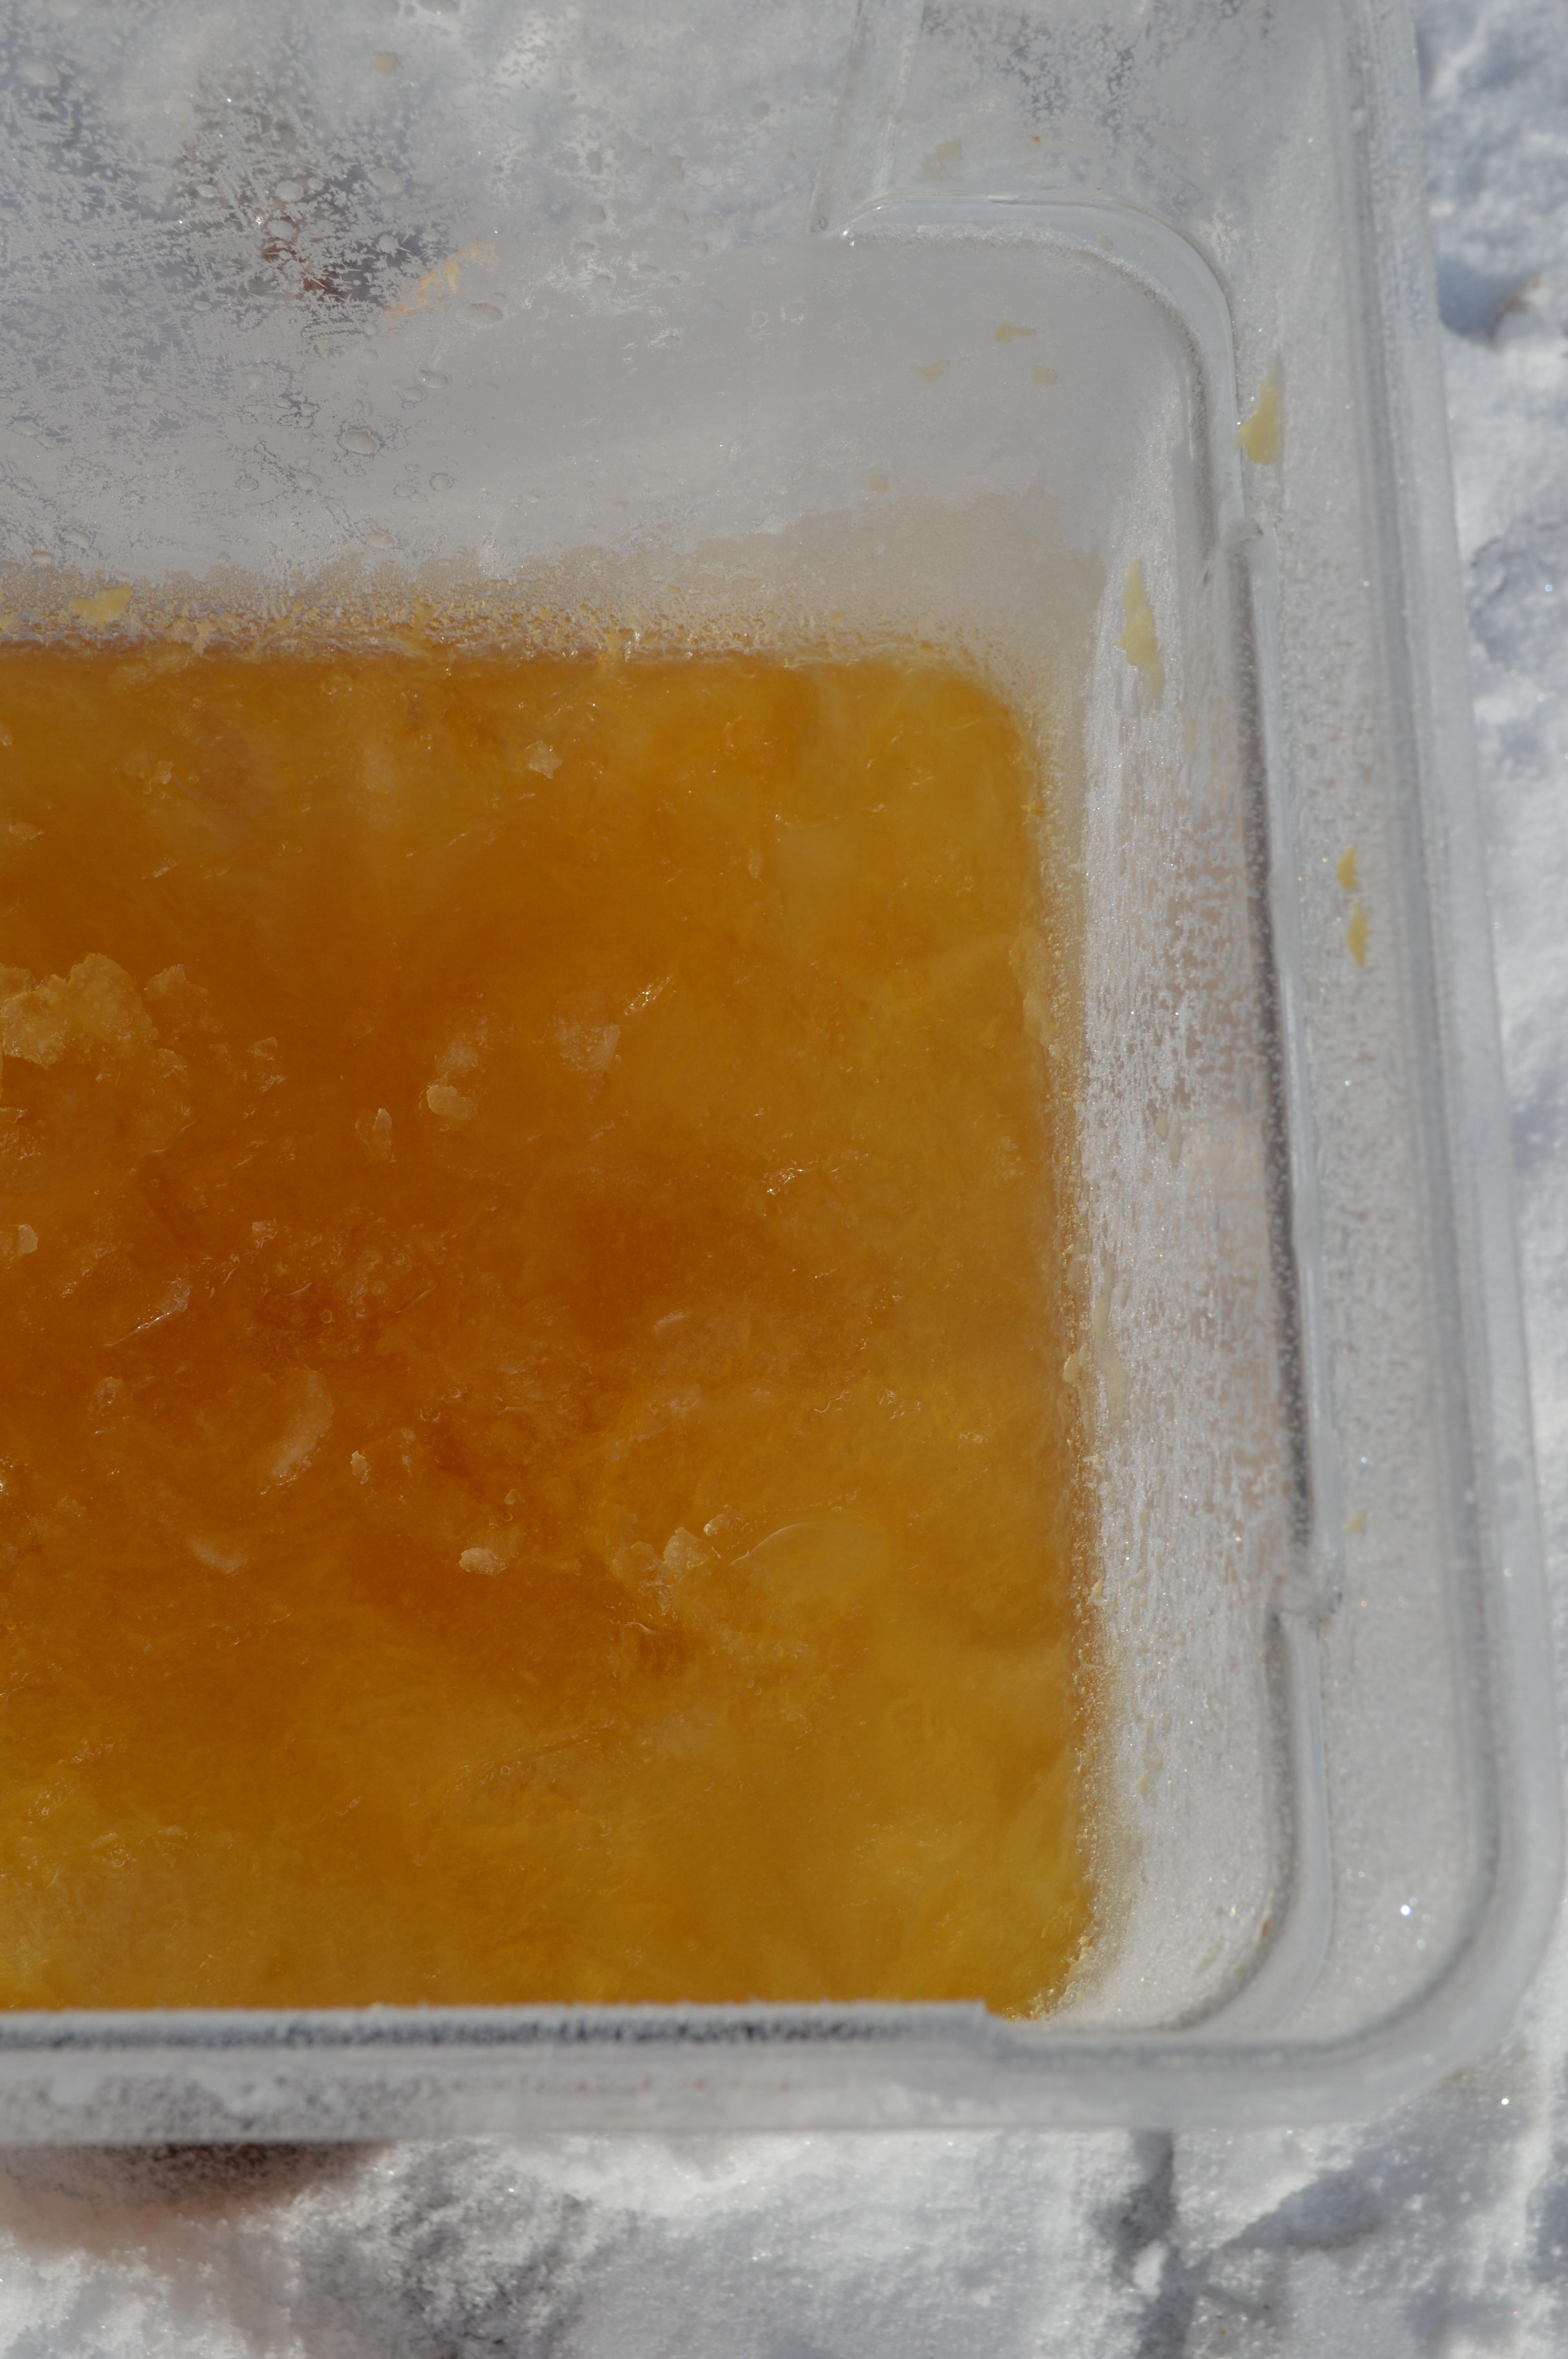 Freezing cider: the first step in making applejack